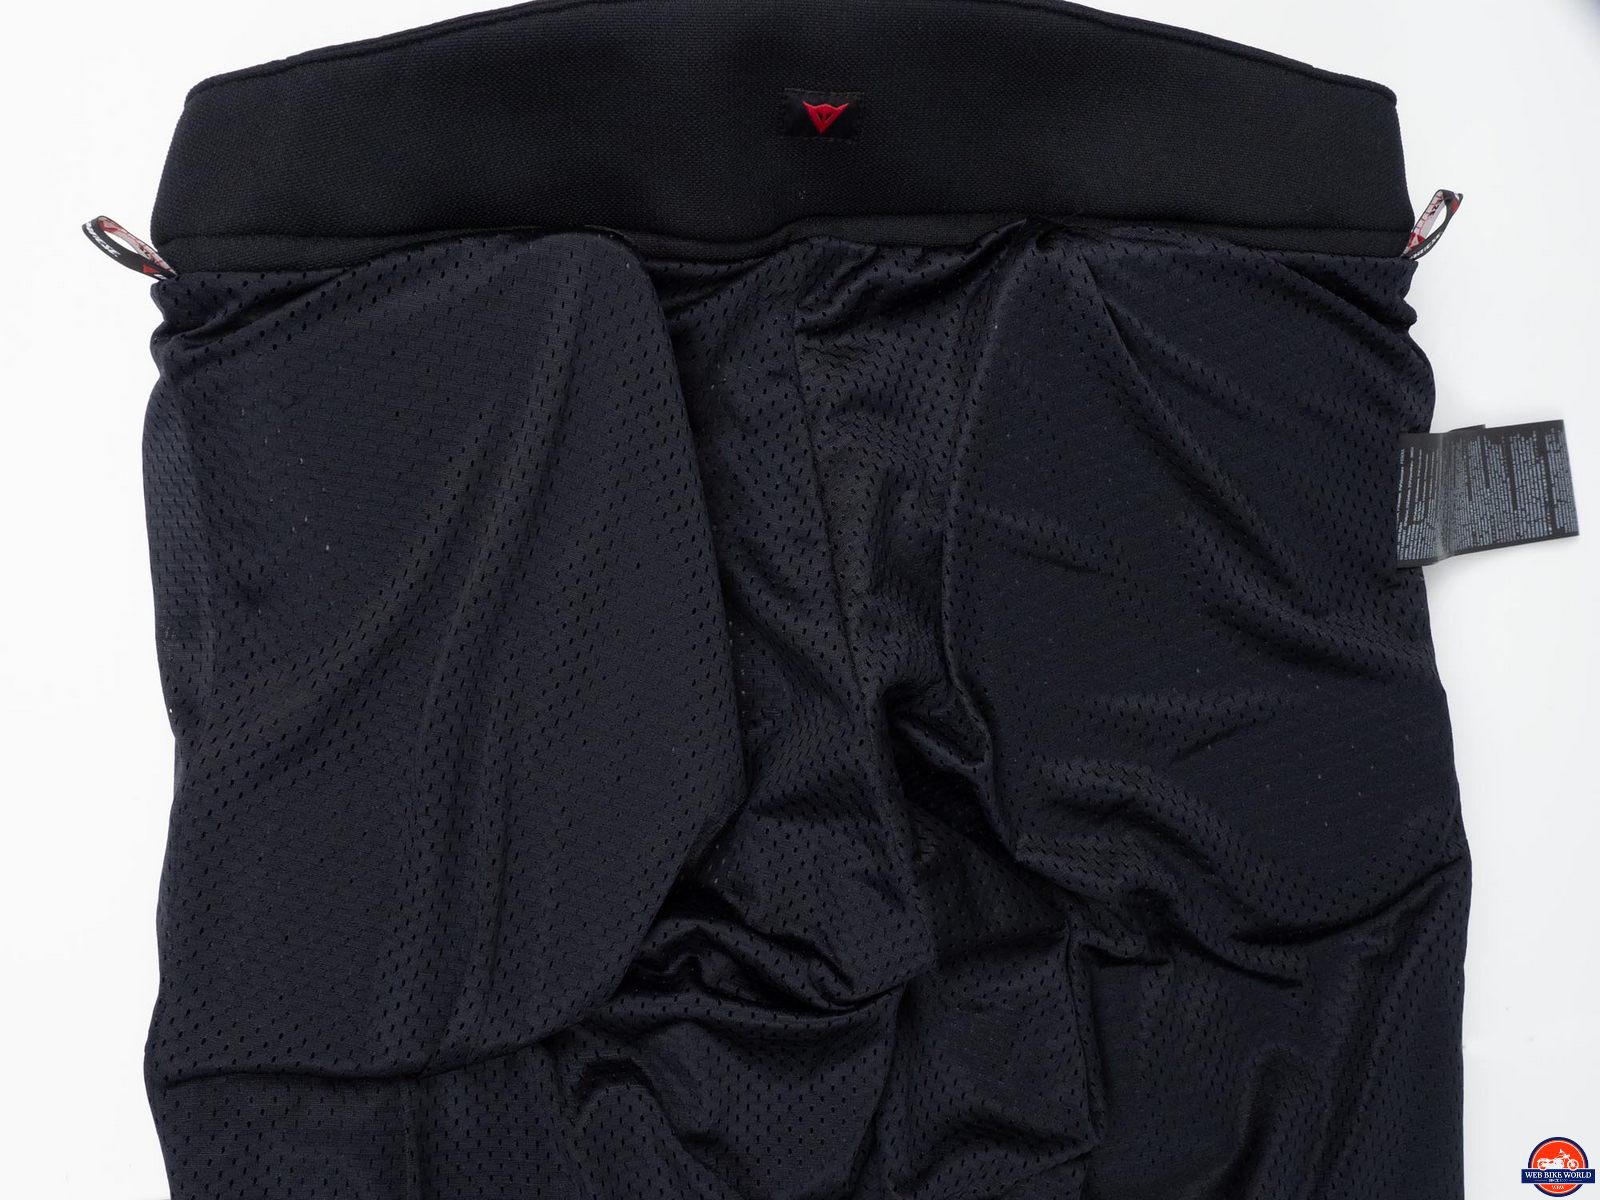 Dainese New Drake Air Textile Pants Review | webBikeWorld